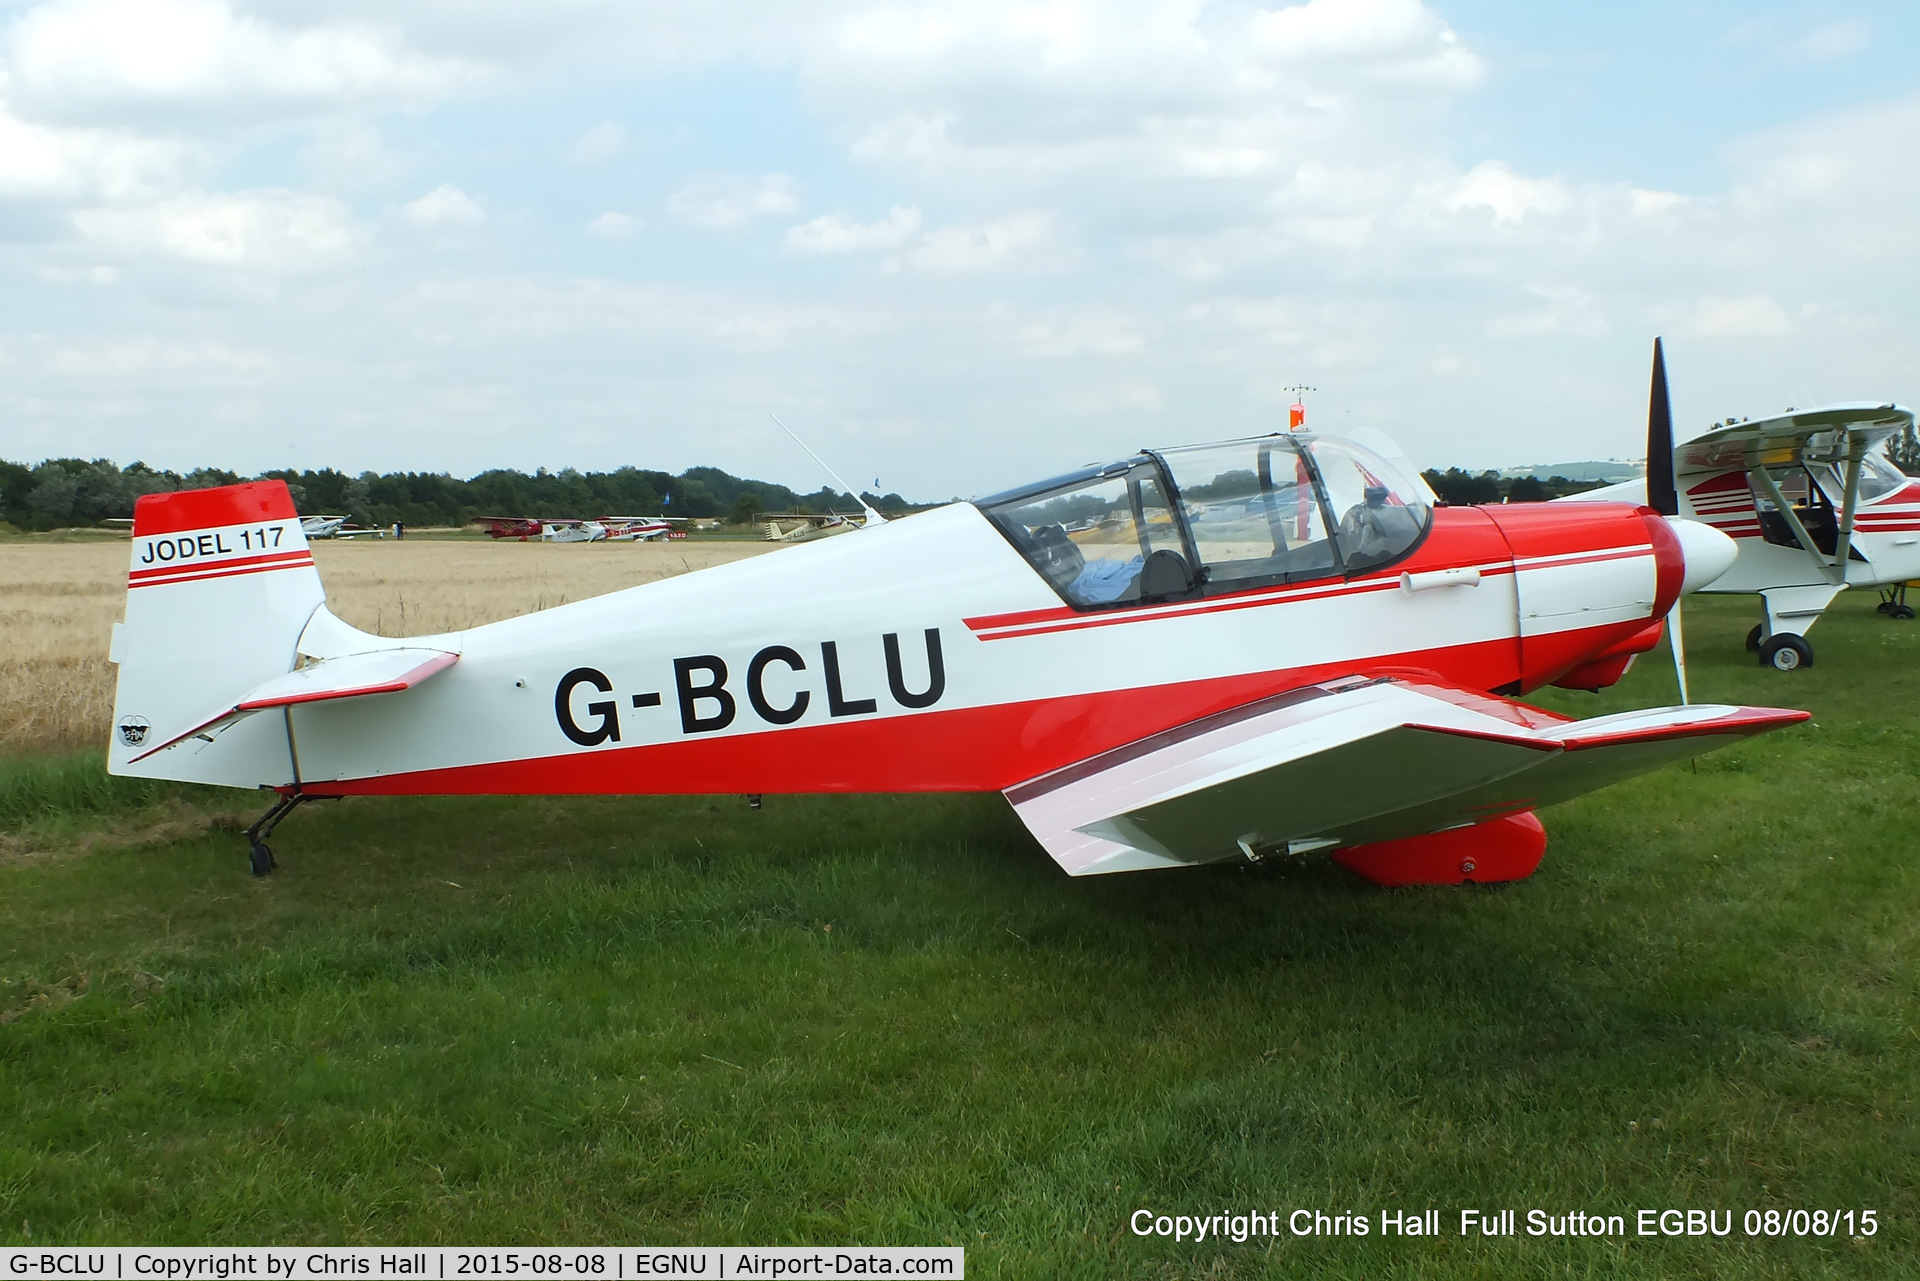 G-BCLU, 1957 SAN Jodel D-117 C/N 506, at the Vale of York LAA strut flyin, Full Sutton